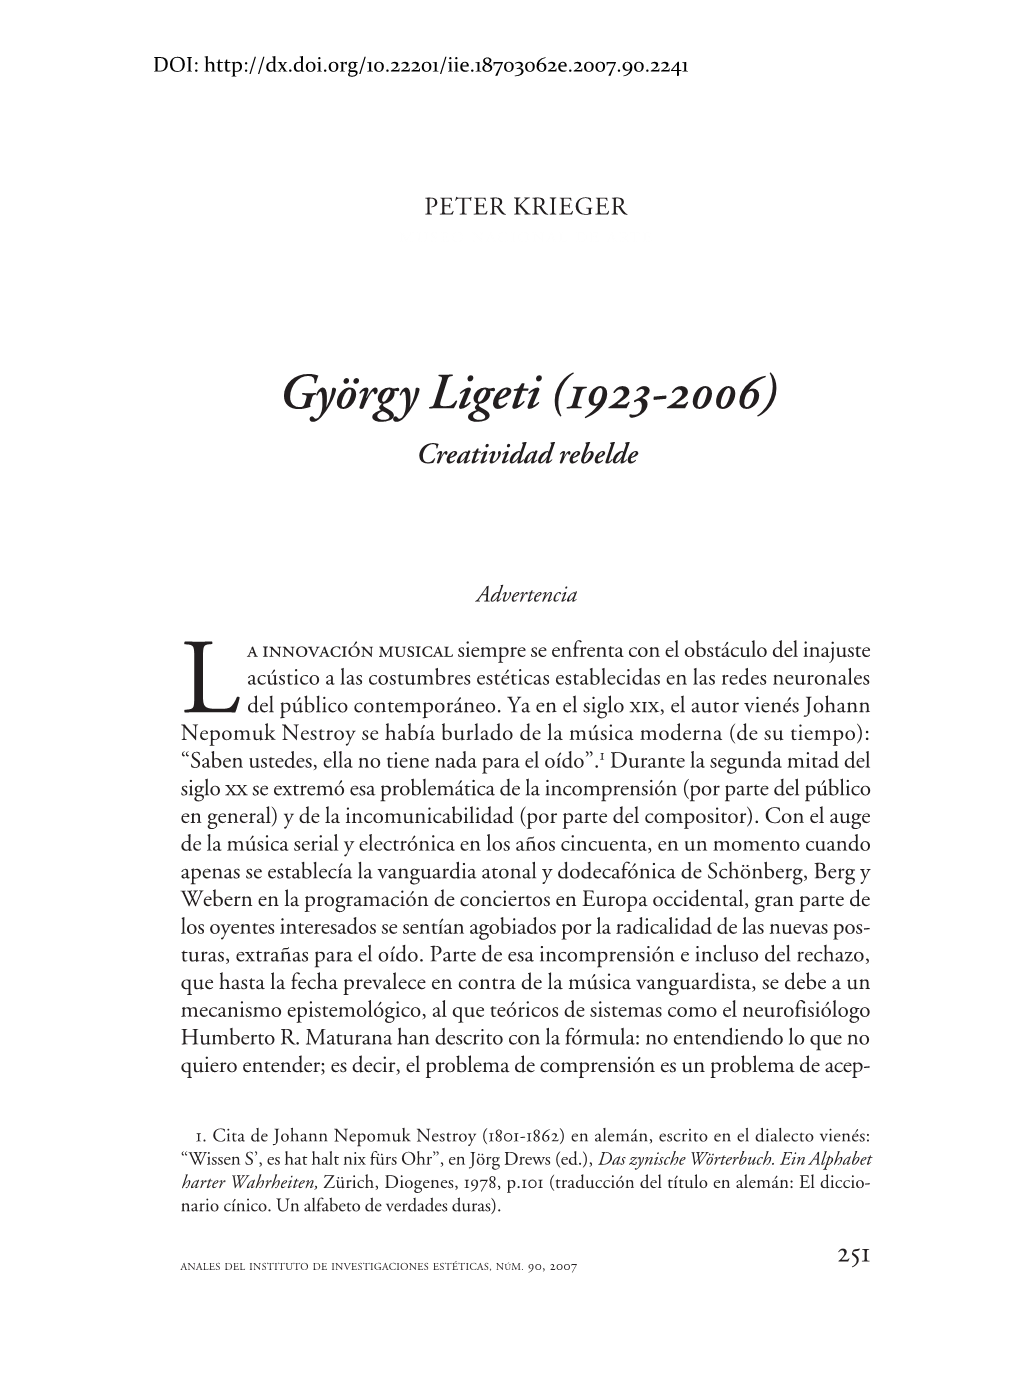 György Ligeti (1923-2006) Creatividad Rebelde